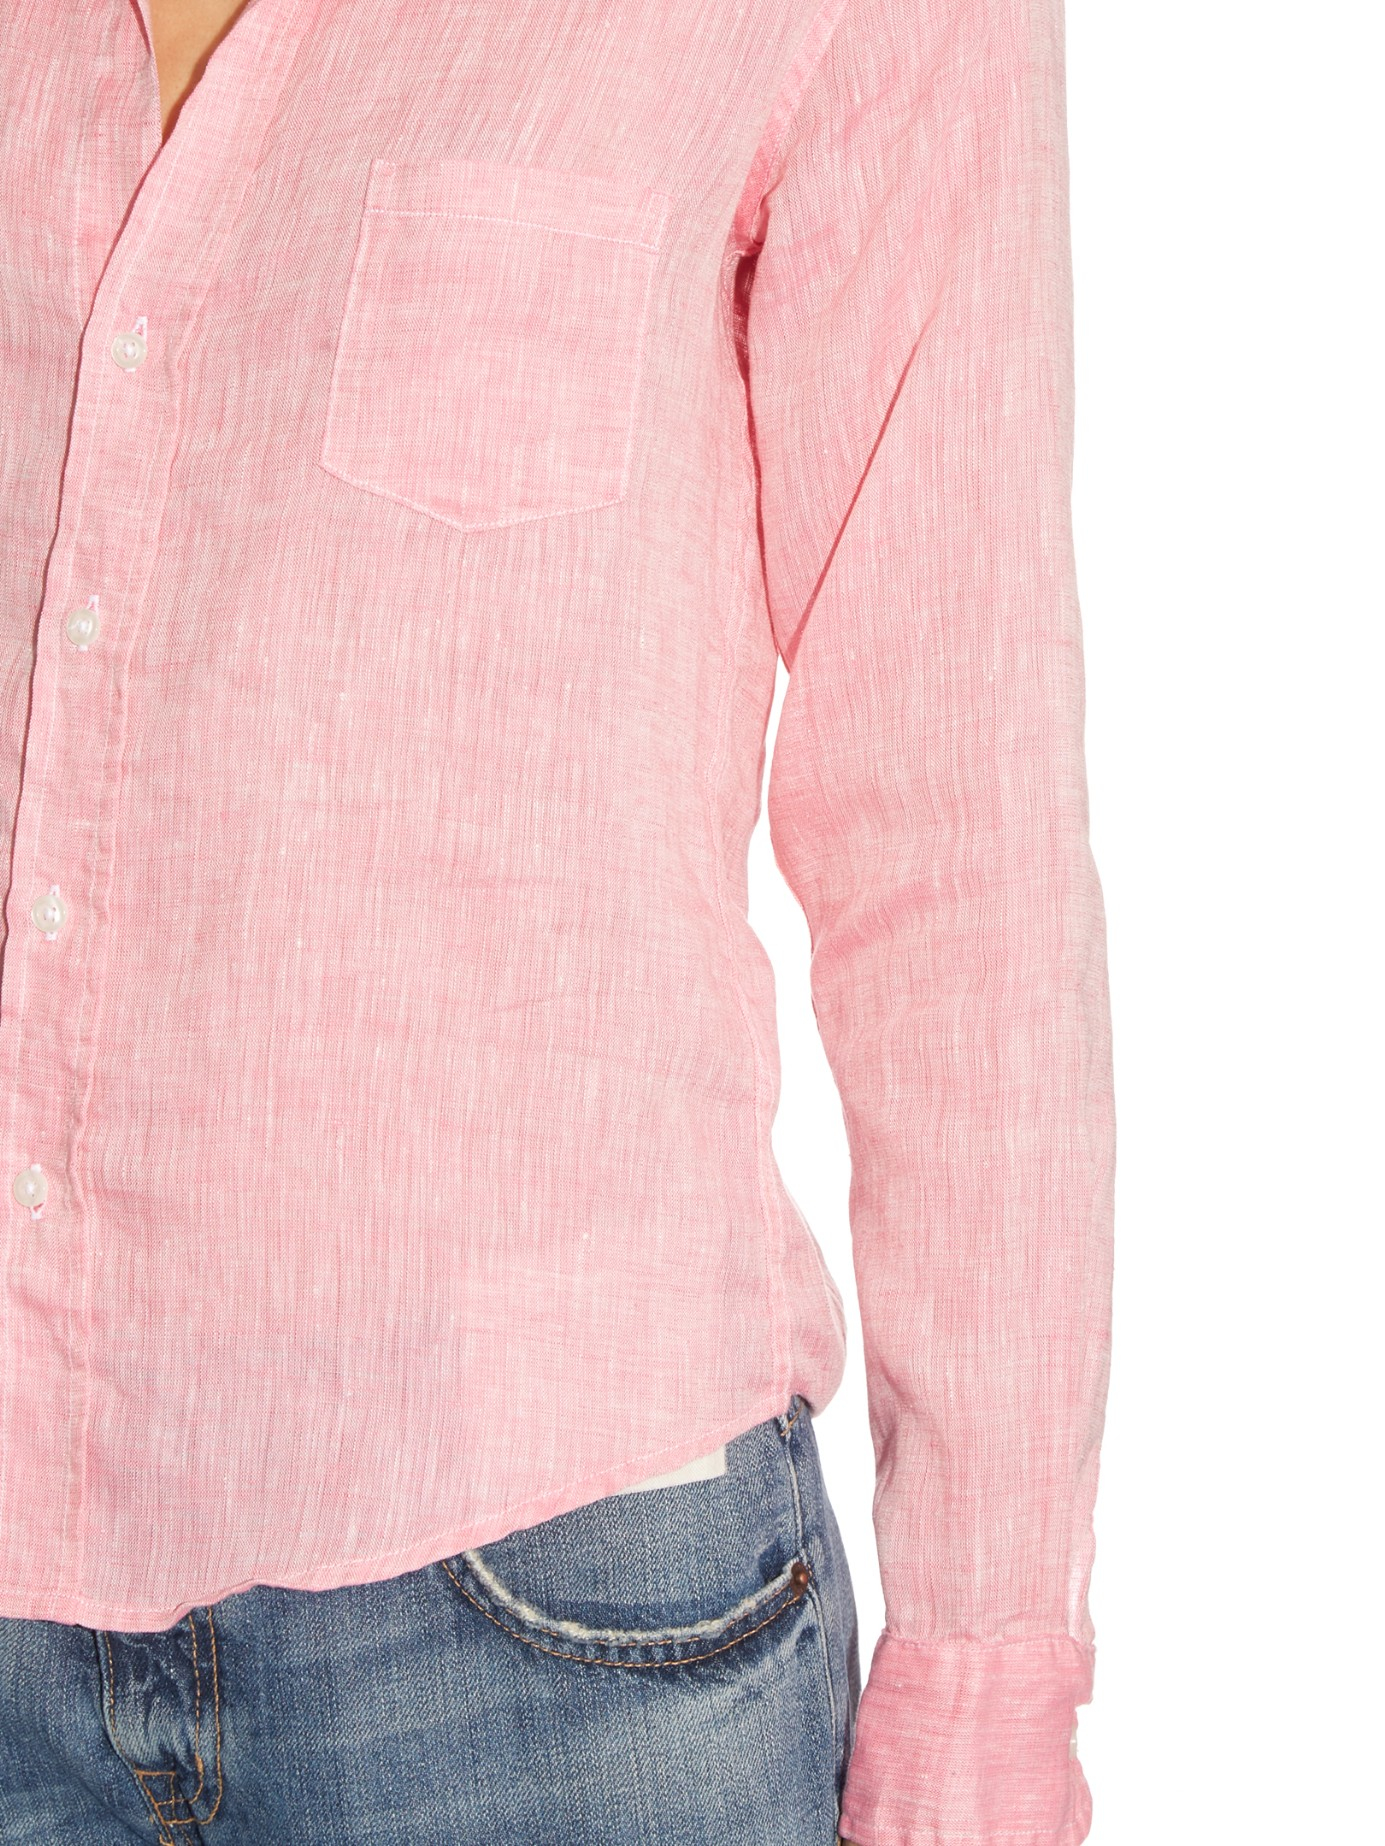 Frank & Eileen Barry Shirt - Neon Pink Stripe on Garmentory